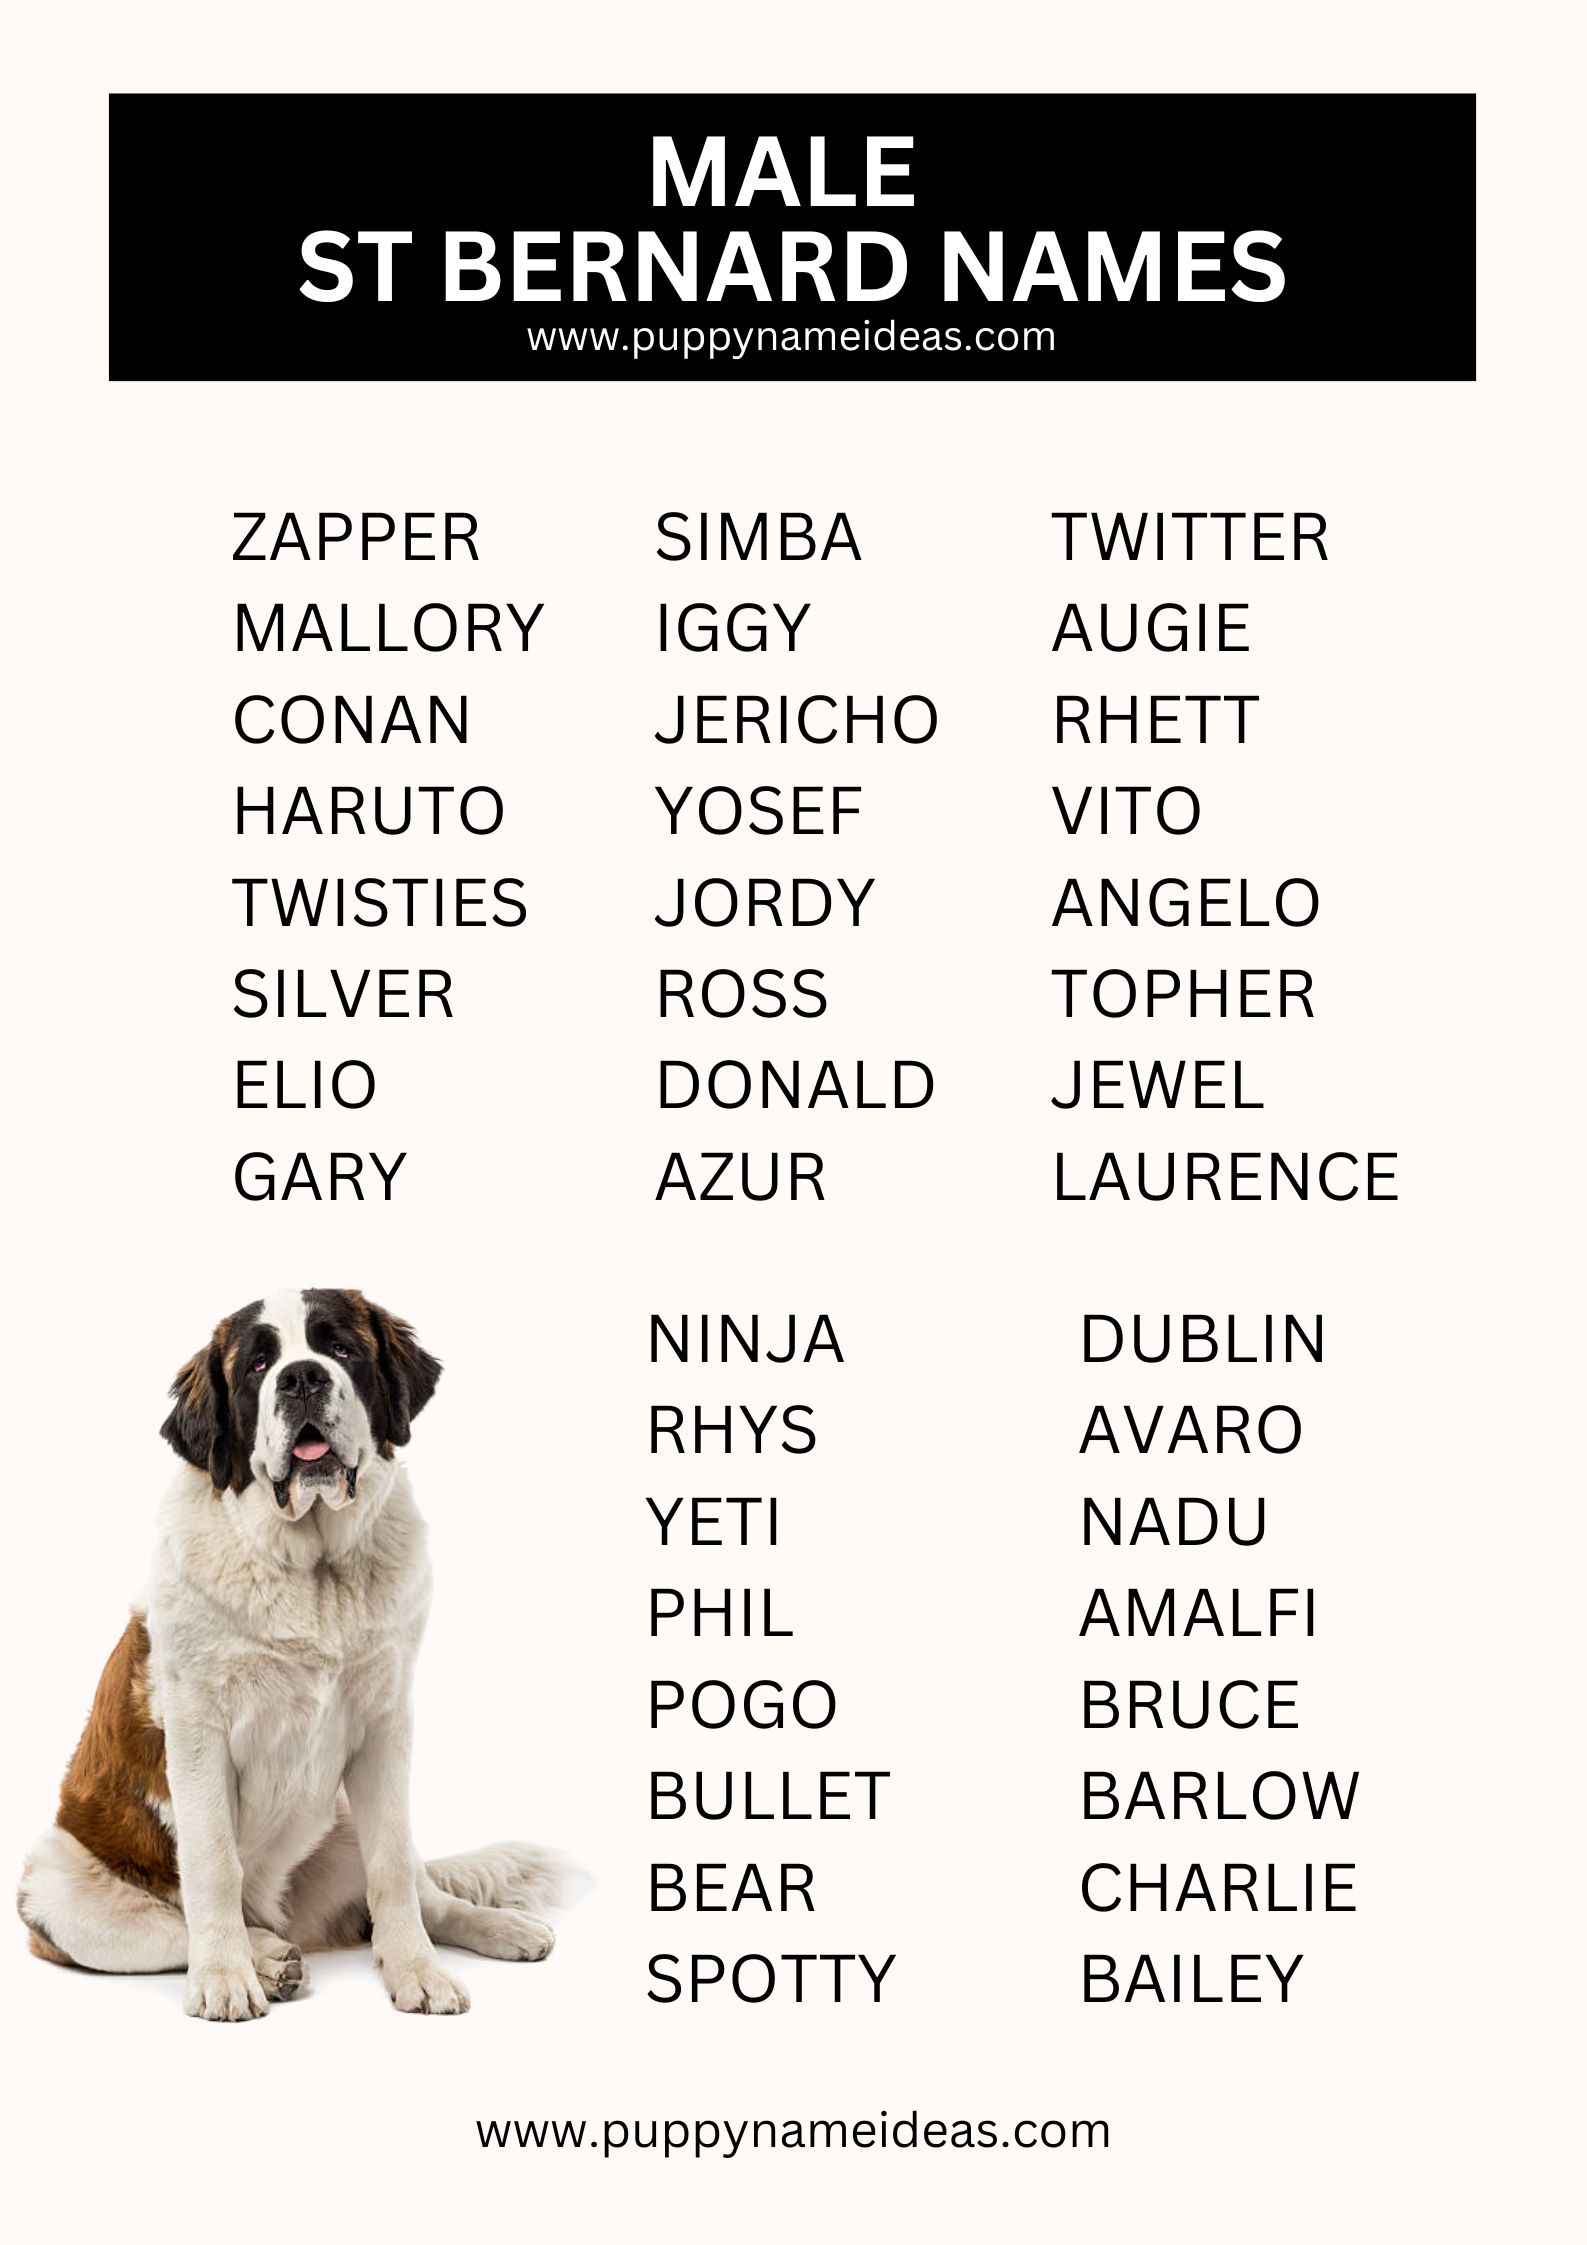 List Of Male St Bernard Names